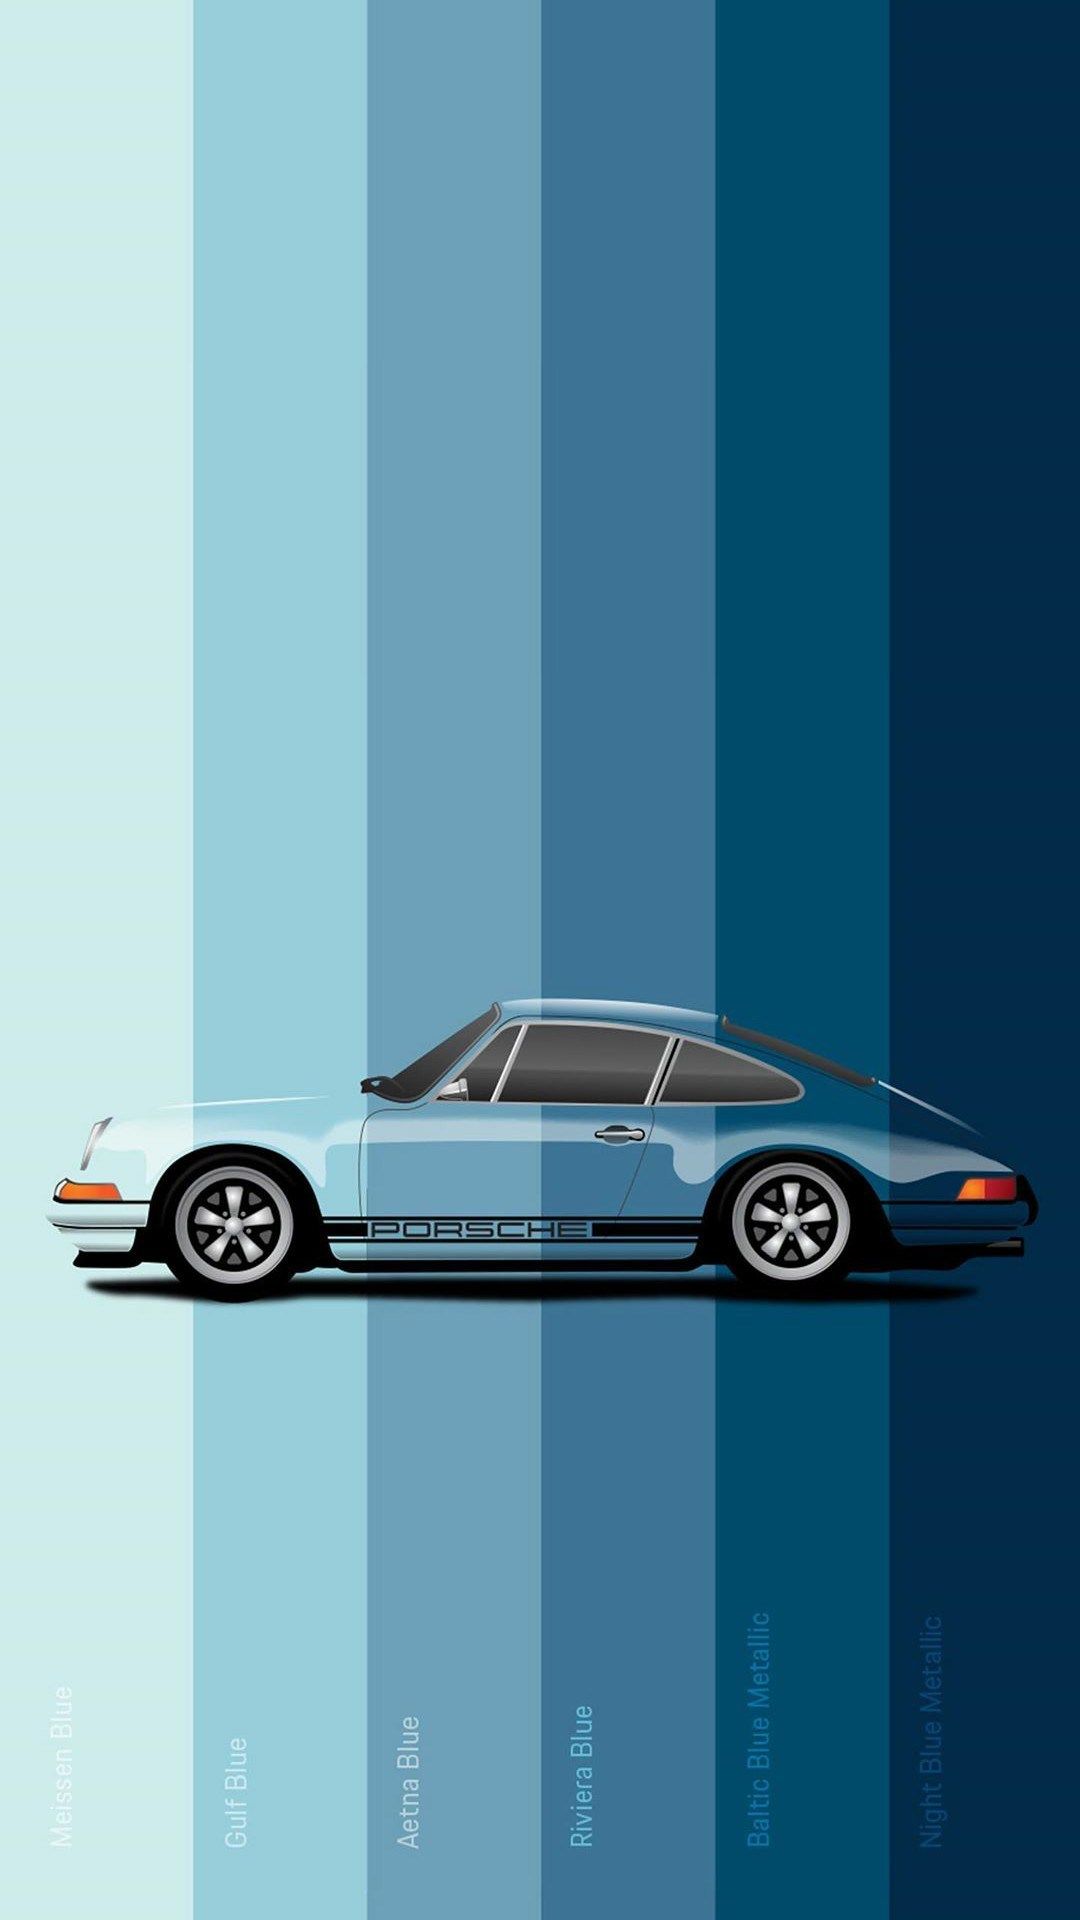 Blue Porsche Samsung Galaxy Note 4K Wallpaper ⋆ Traxzee. Car wallpaper, Car iphone wallpaper, Porsche